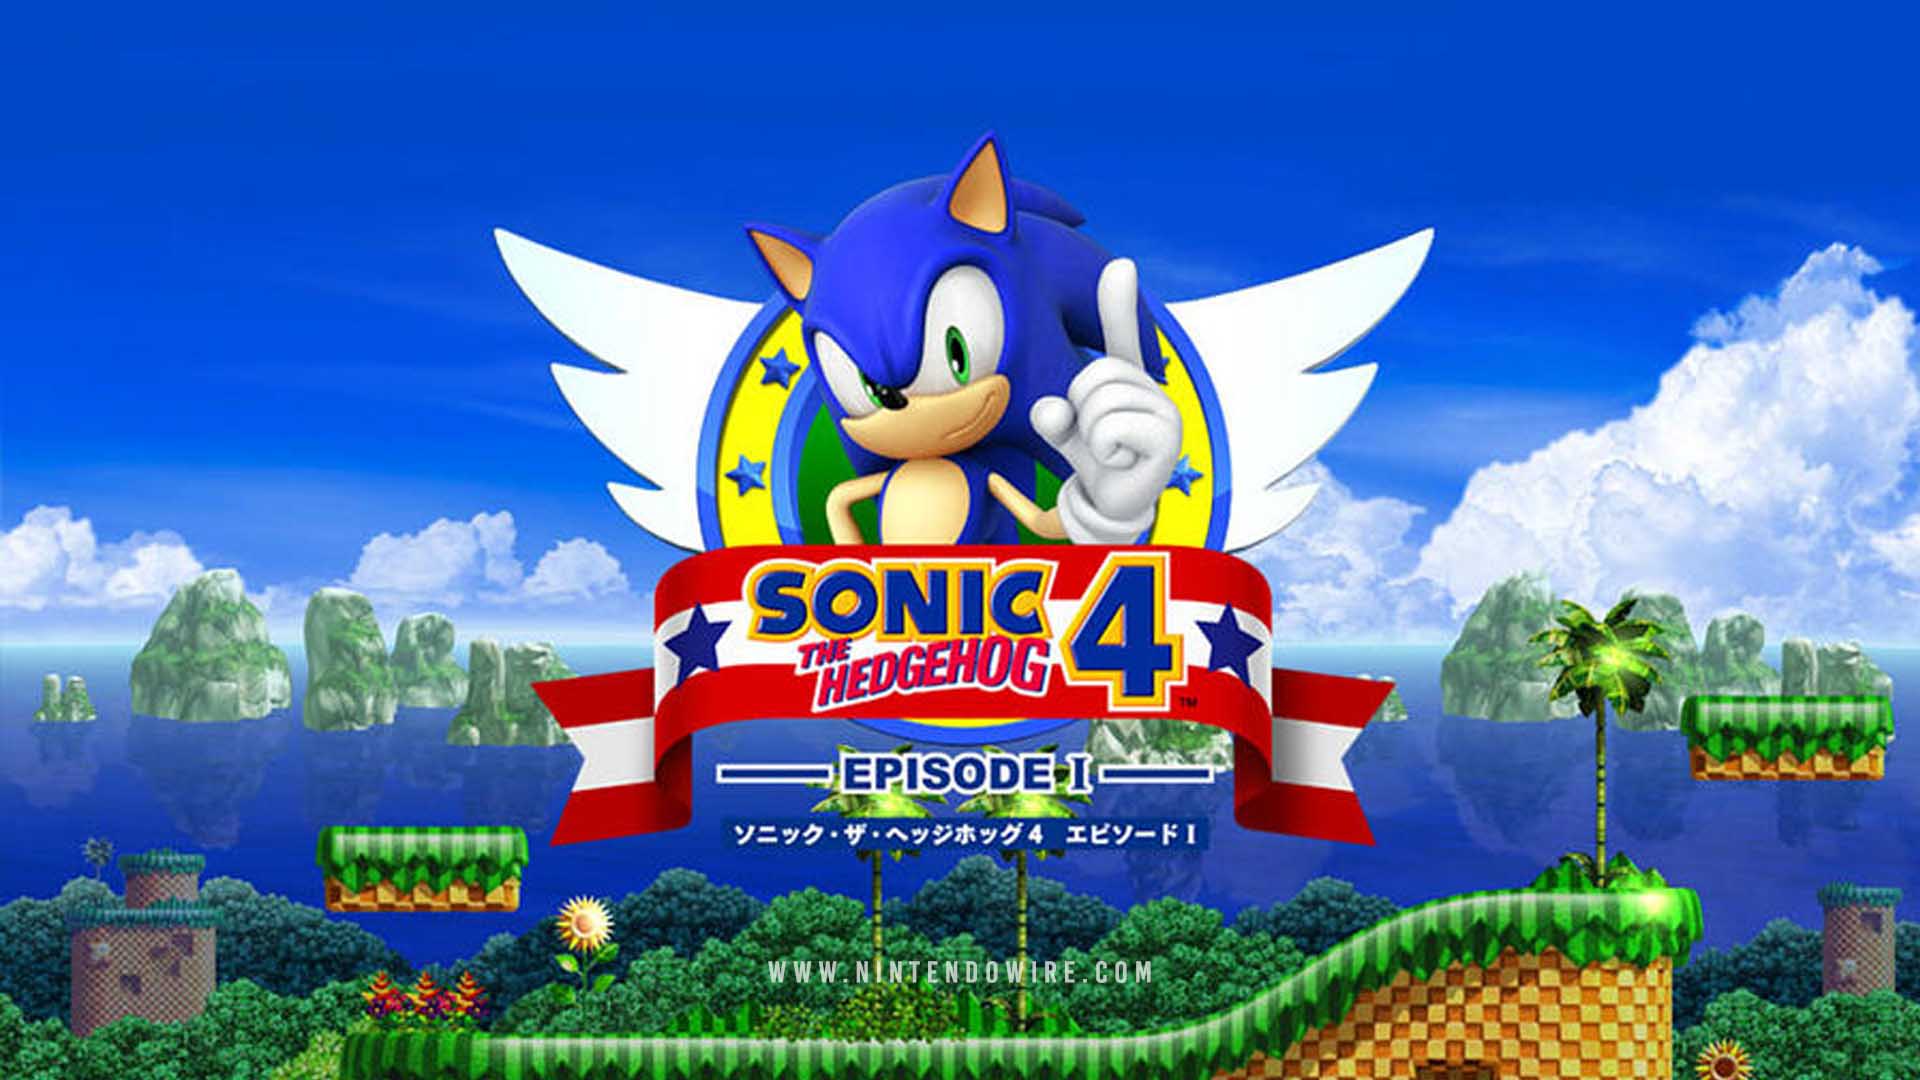 Sonic the hedgehog 4 2. Соник хеджхог 1. Игра Sonic the Hedgehog 4. Sonic 4 Episode 1. Sonic the Hedgehog 4 Episode i.